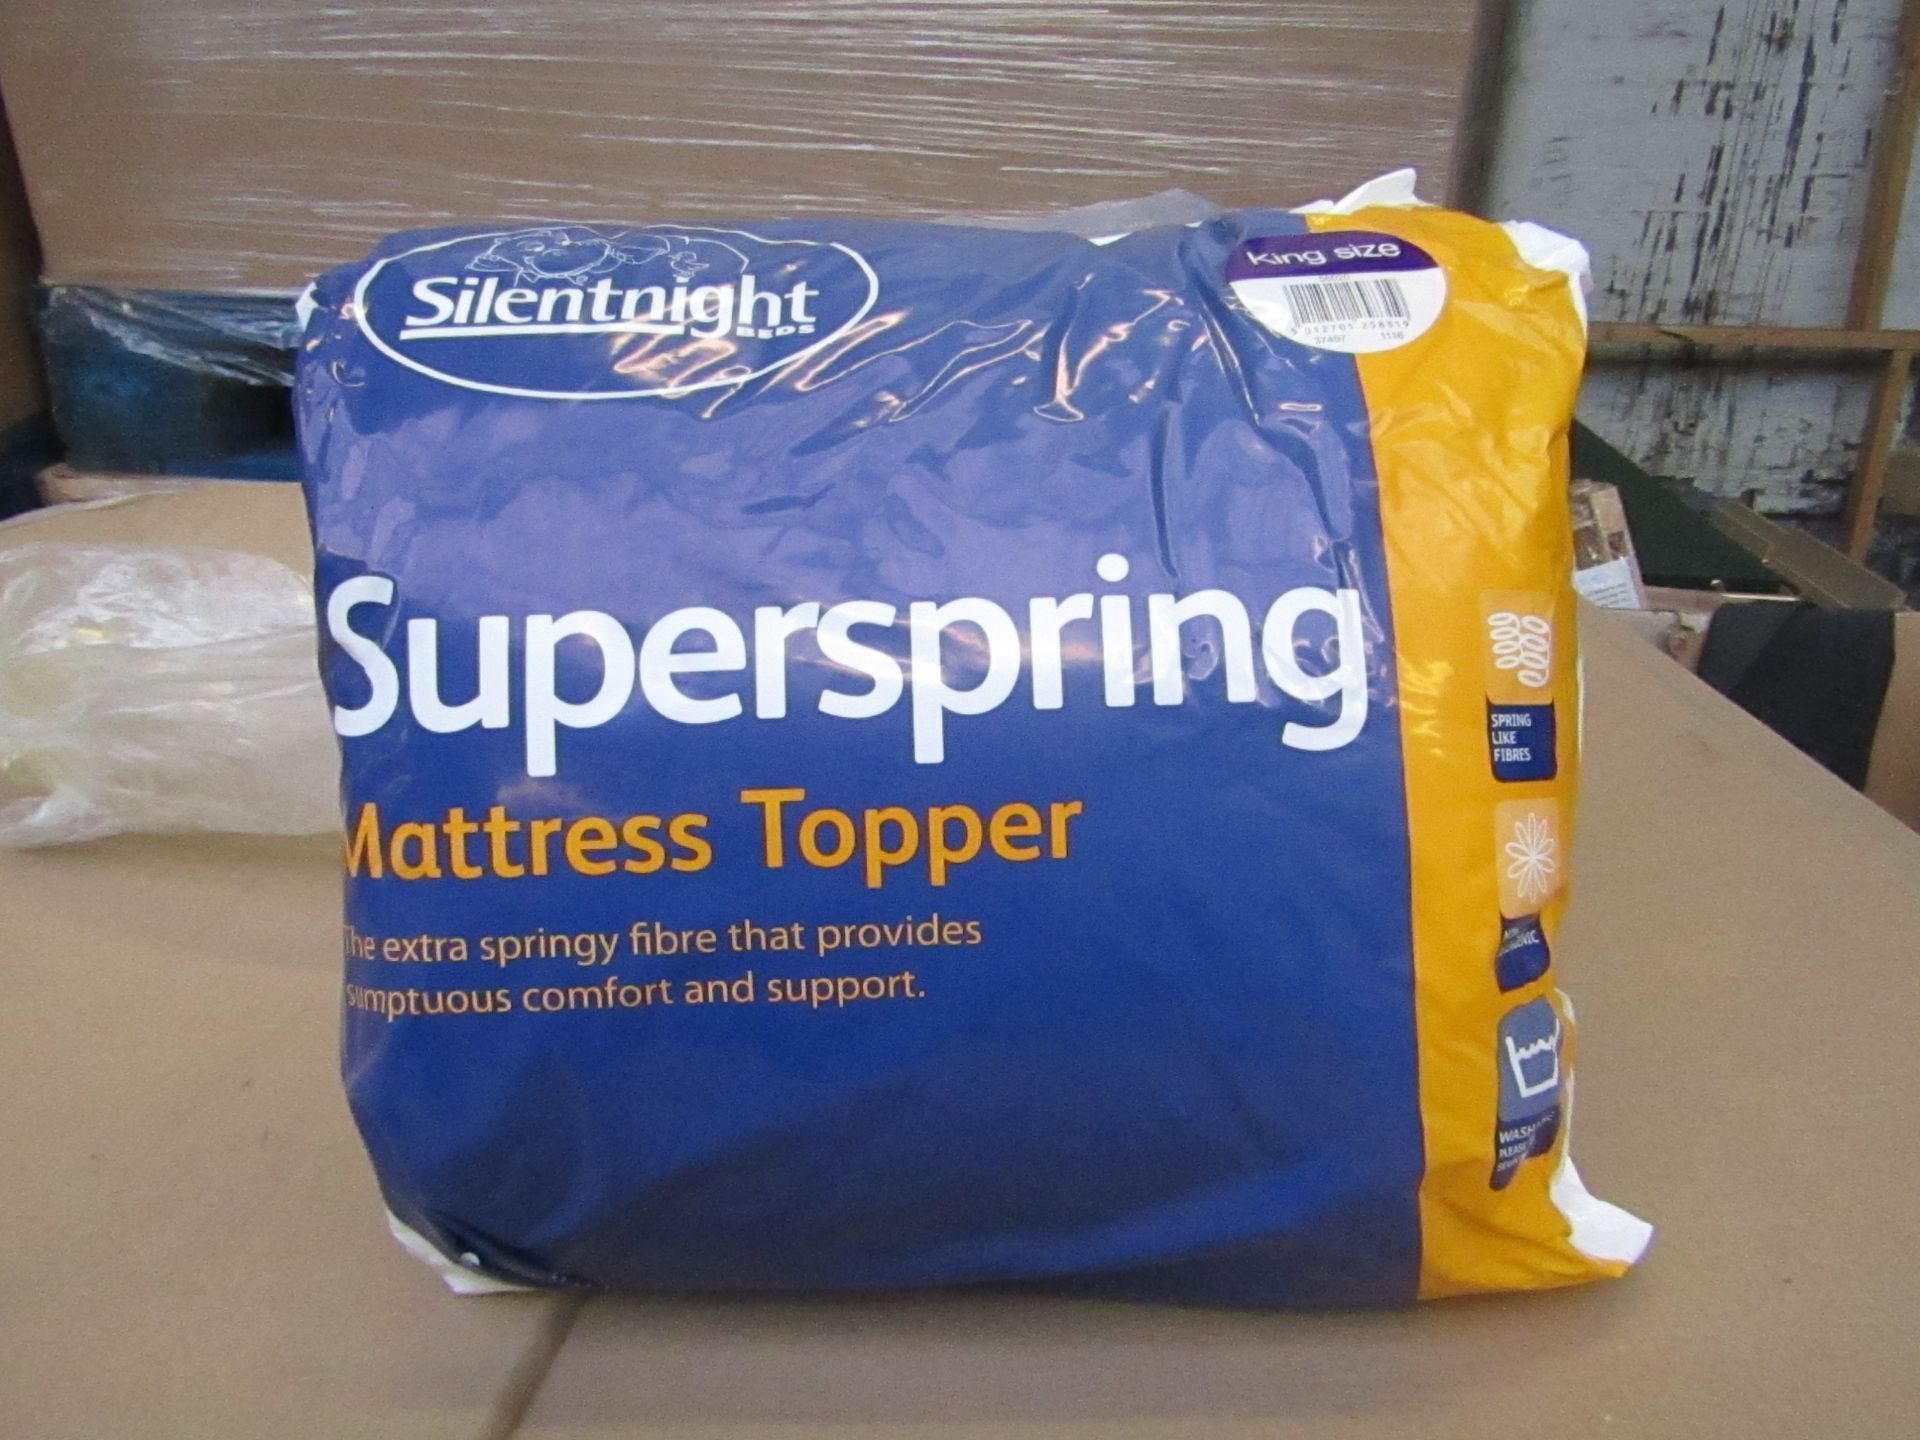 4x Silentnight Super Spring mattress topper, kingsize, all brand new and packaged. Each RRP £29.99